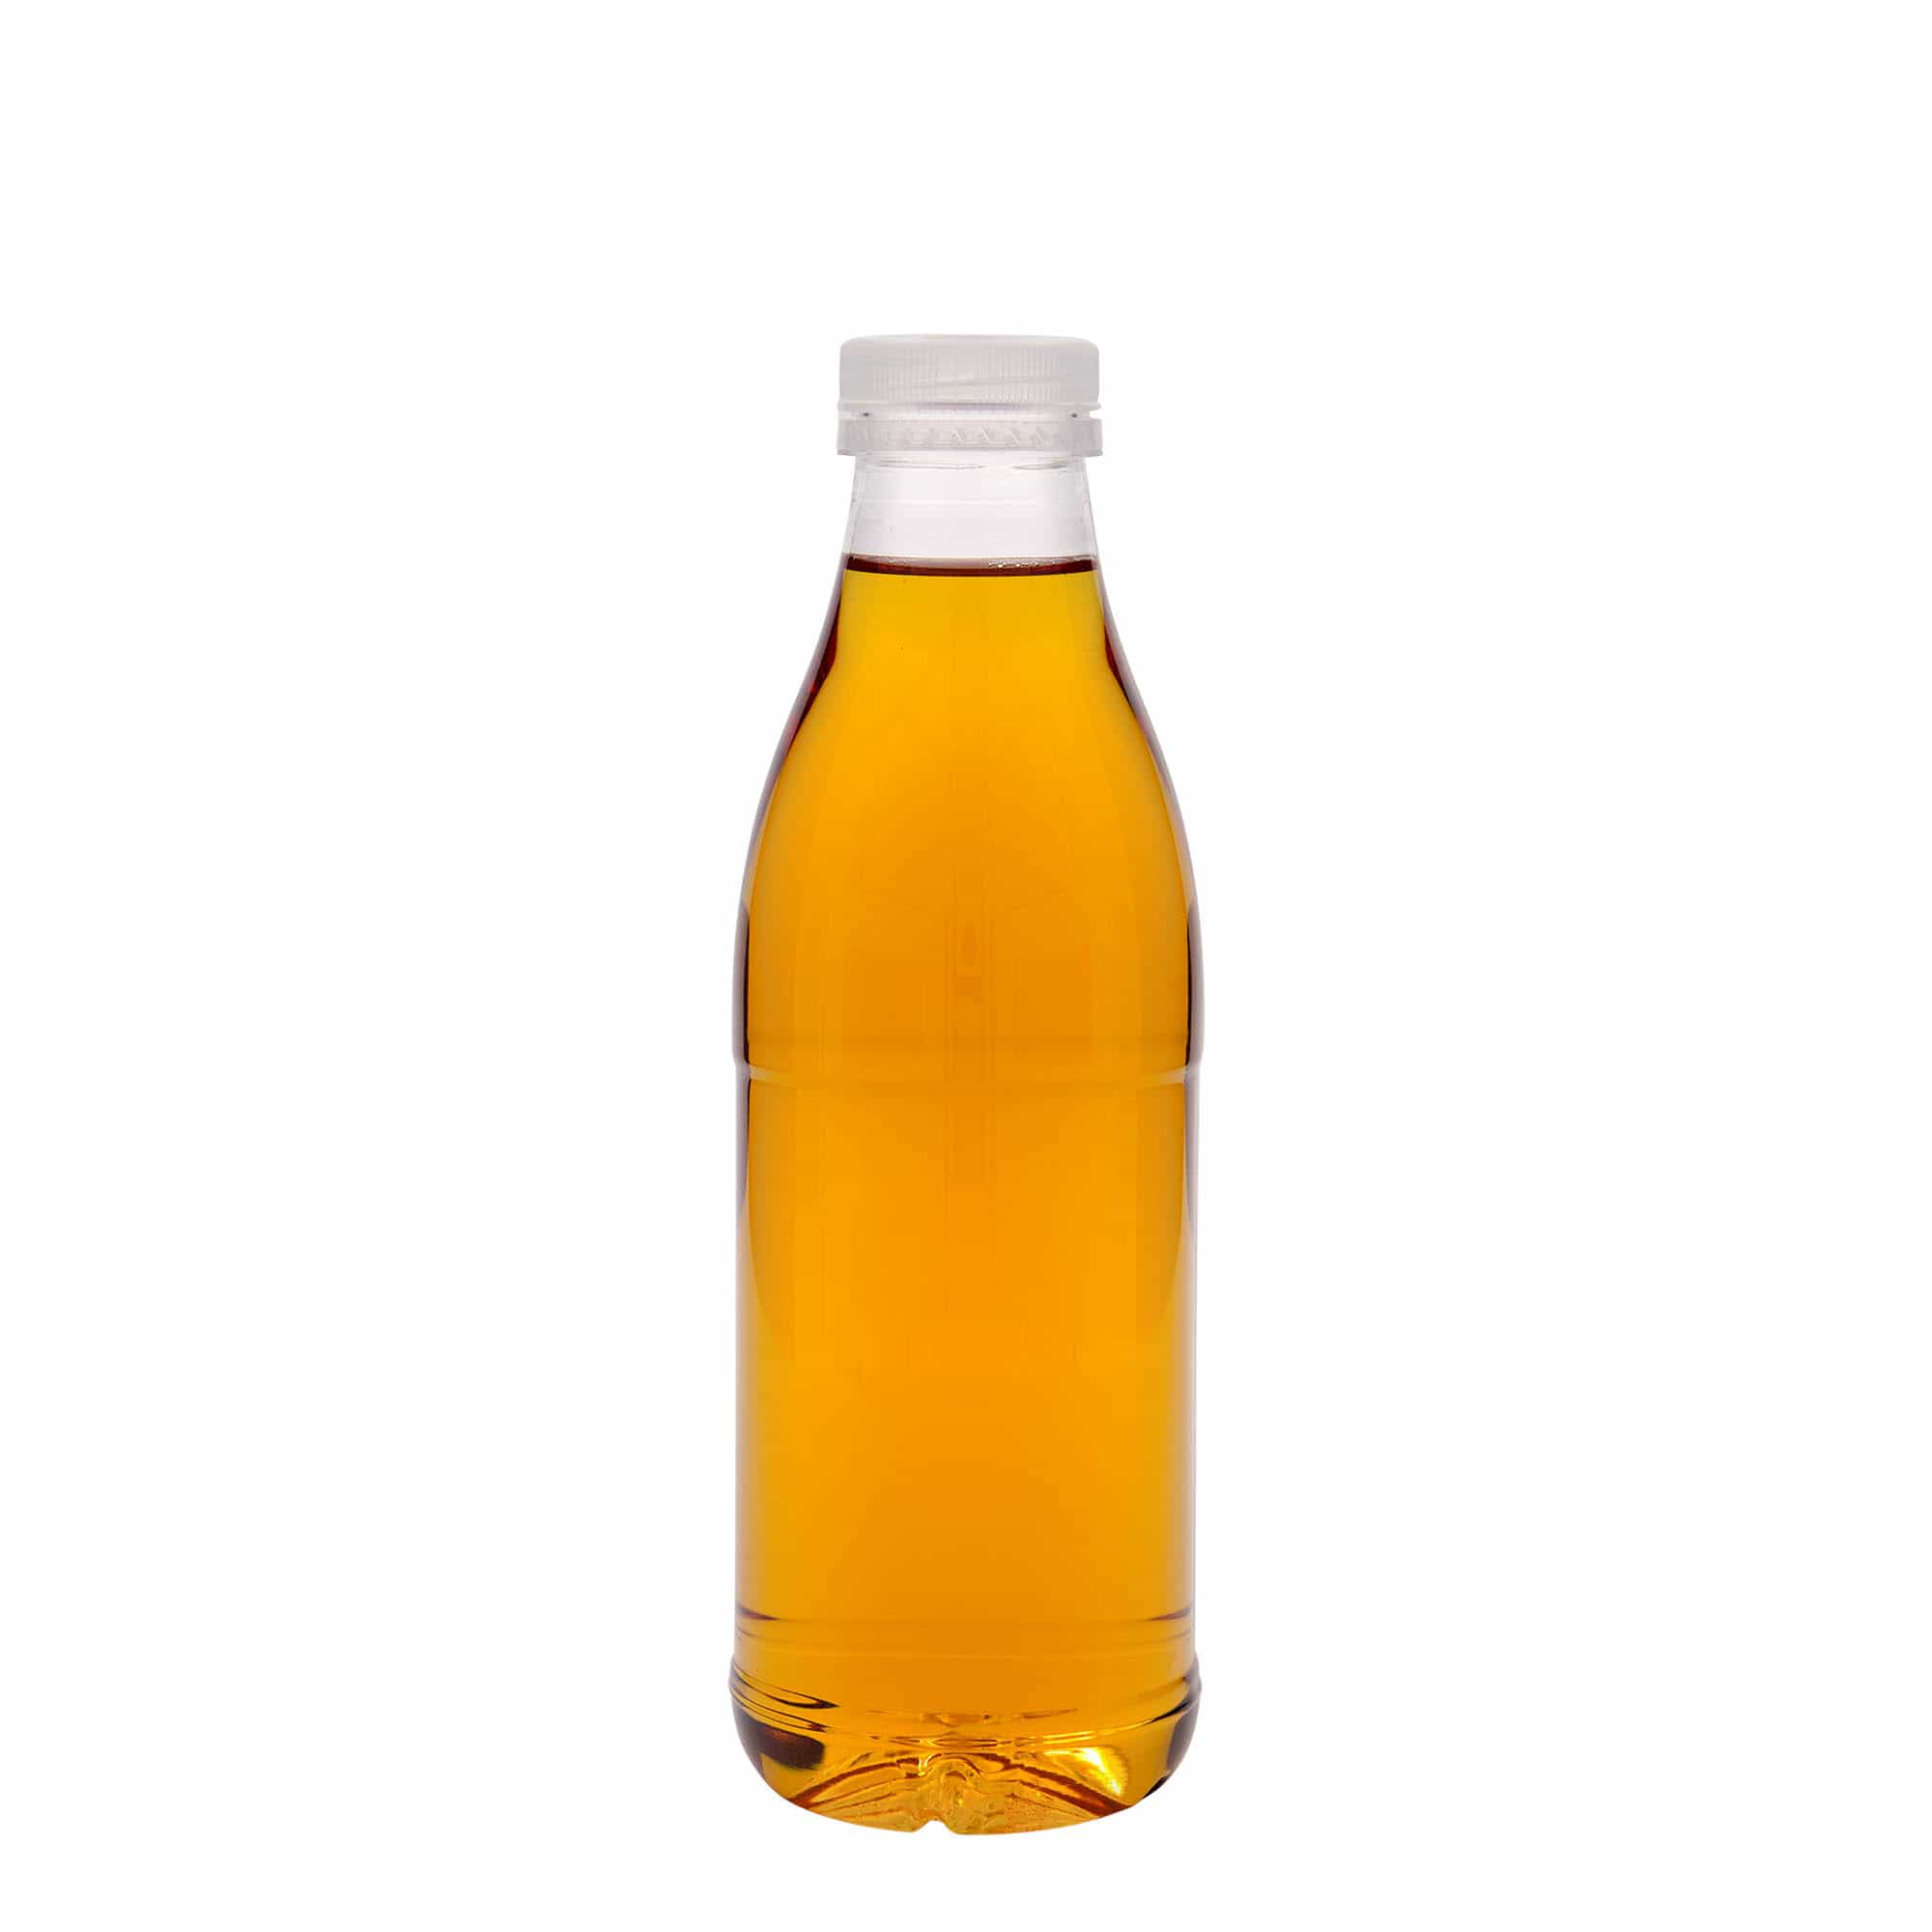 750 ml PET-flaske 'Milk and Juice', plast, åbning: 38 mm